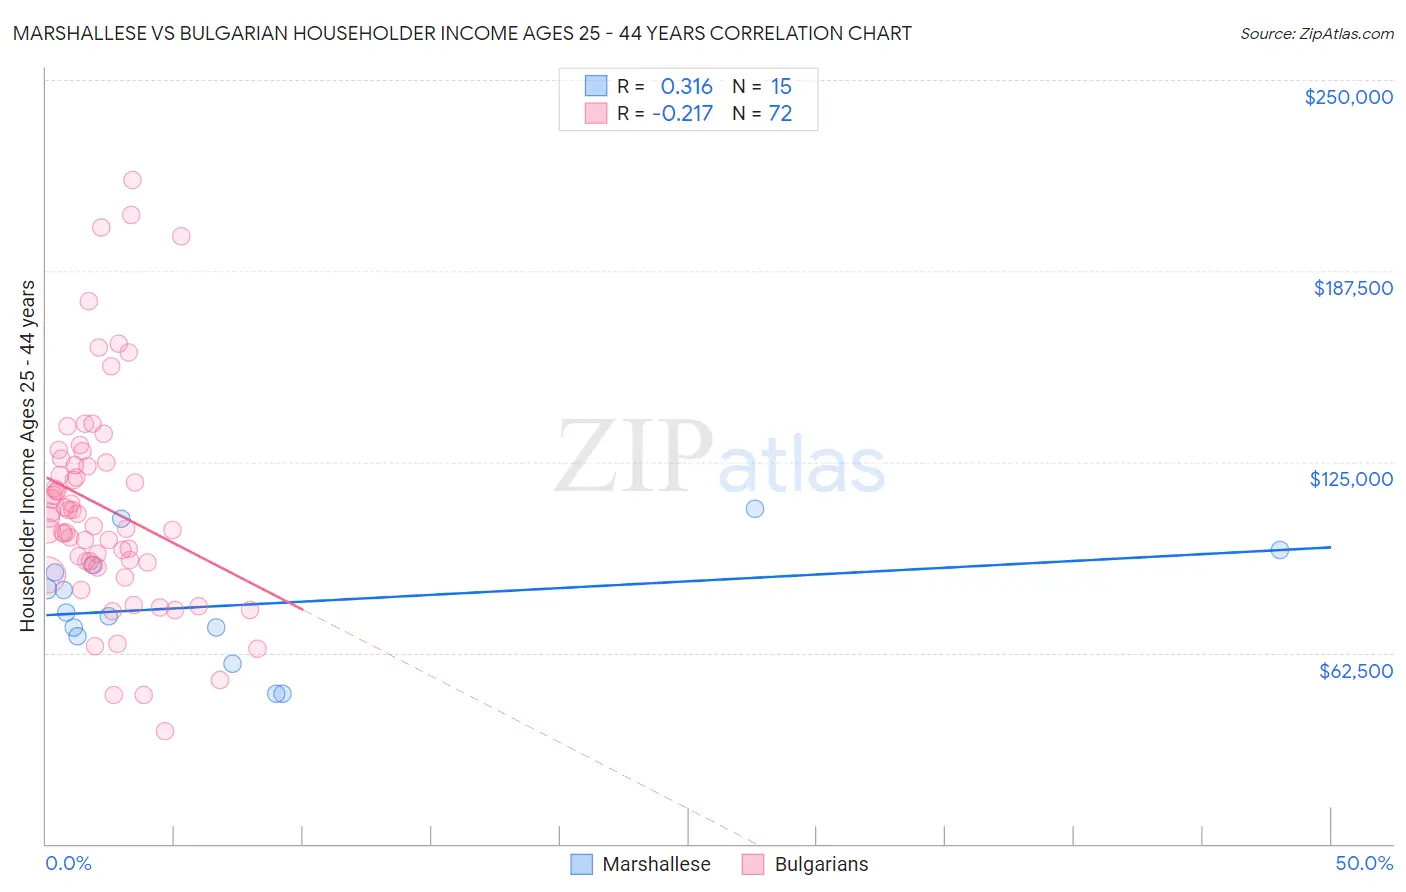 Marshallese vs Bulgarian Householder Income Ages 25 - 44 years